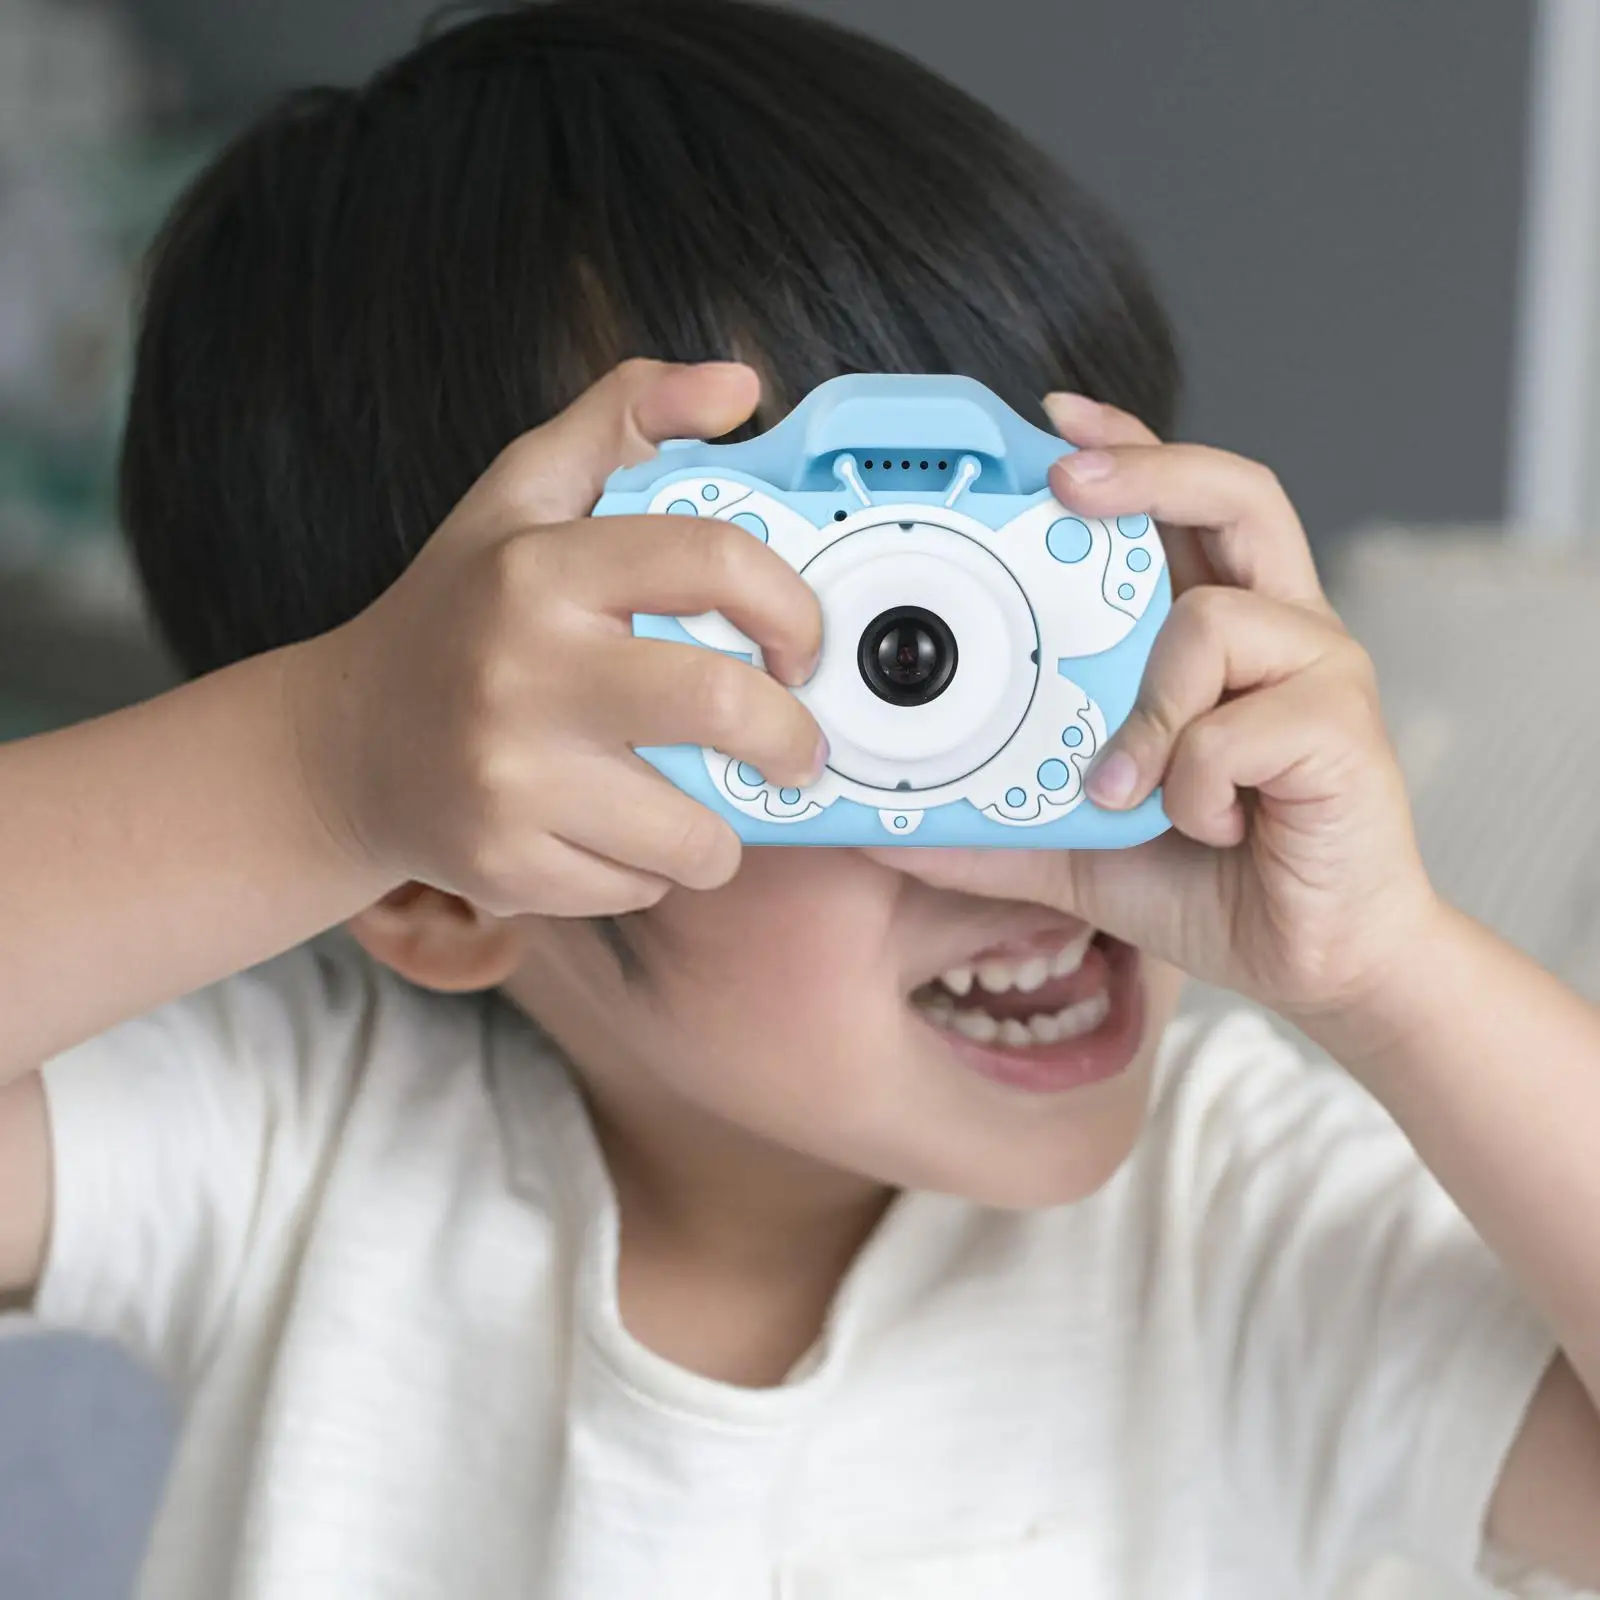 Cute Cameras for Kids Video Portable Children Digital Video Cameras